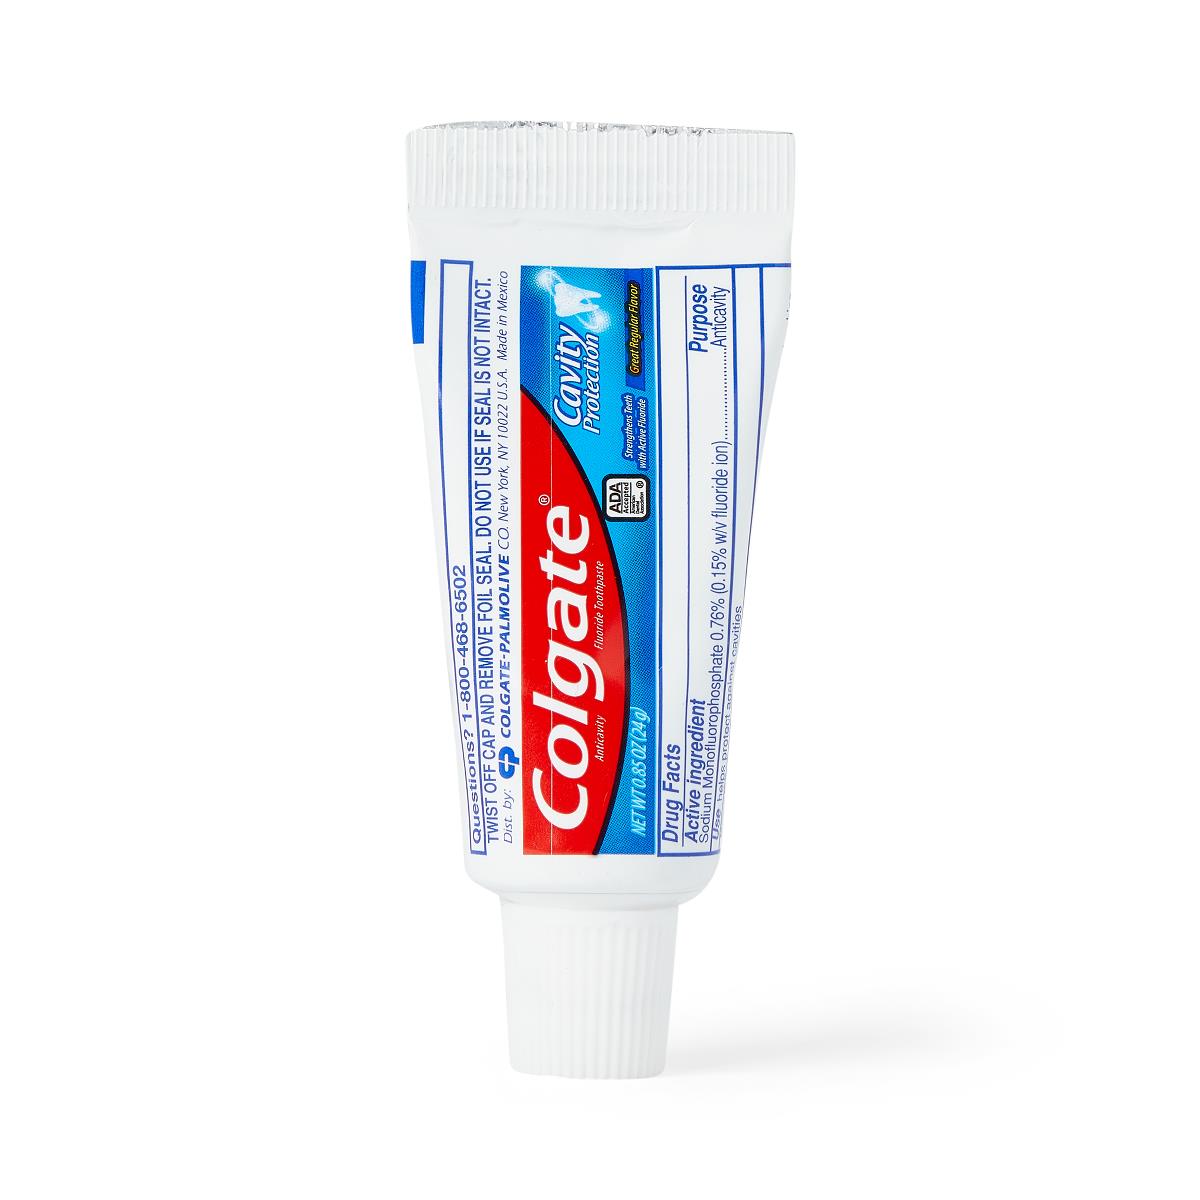 colgate toothpaste tube